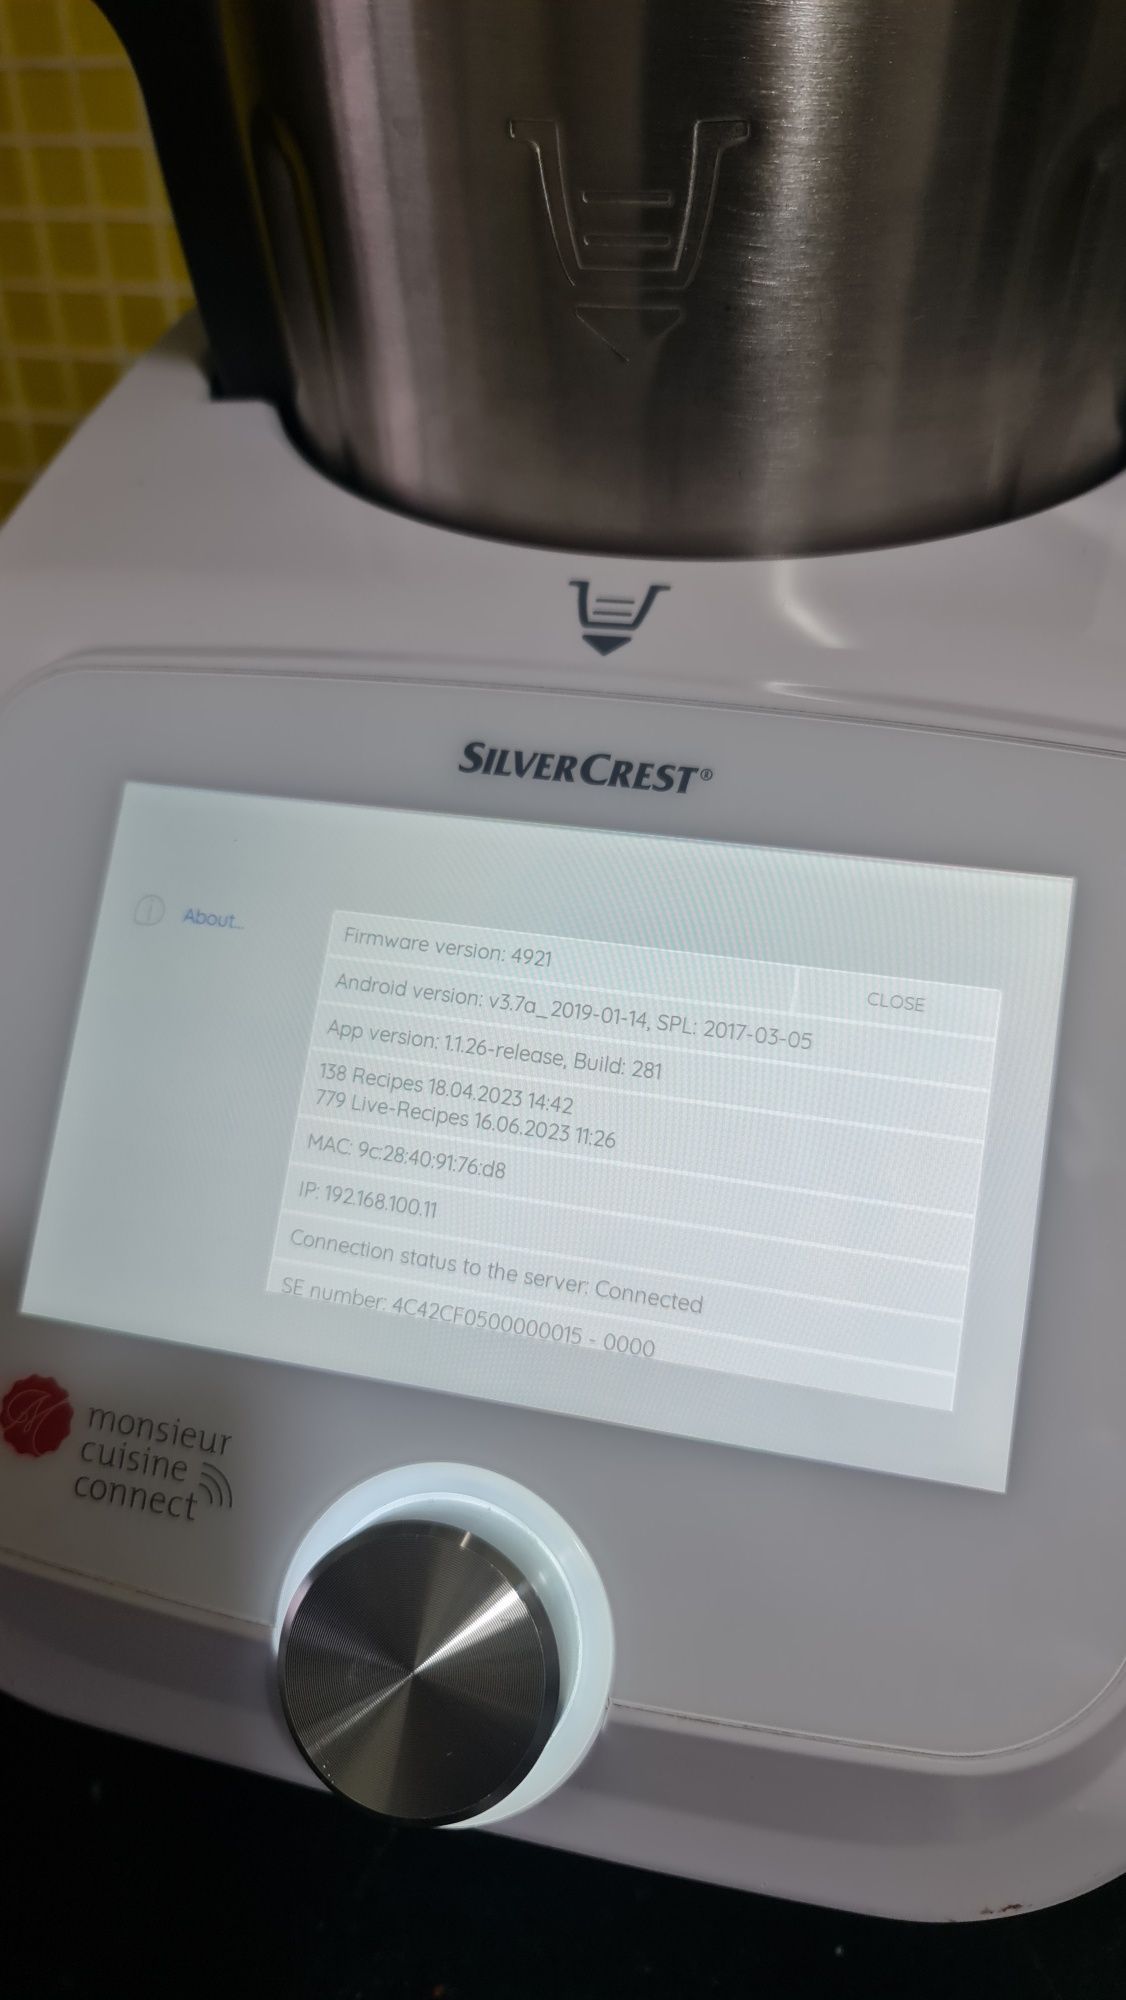 Monsieur Cuisine Connect gen Thermomix robot bucatarie multifunctional